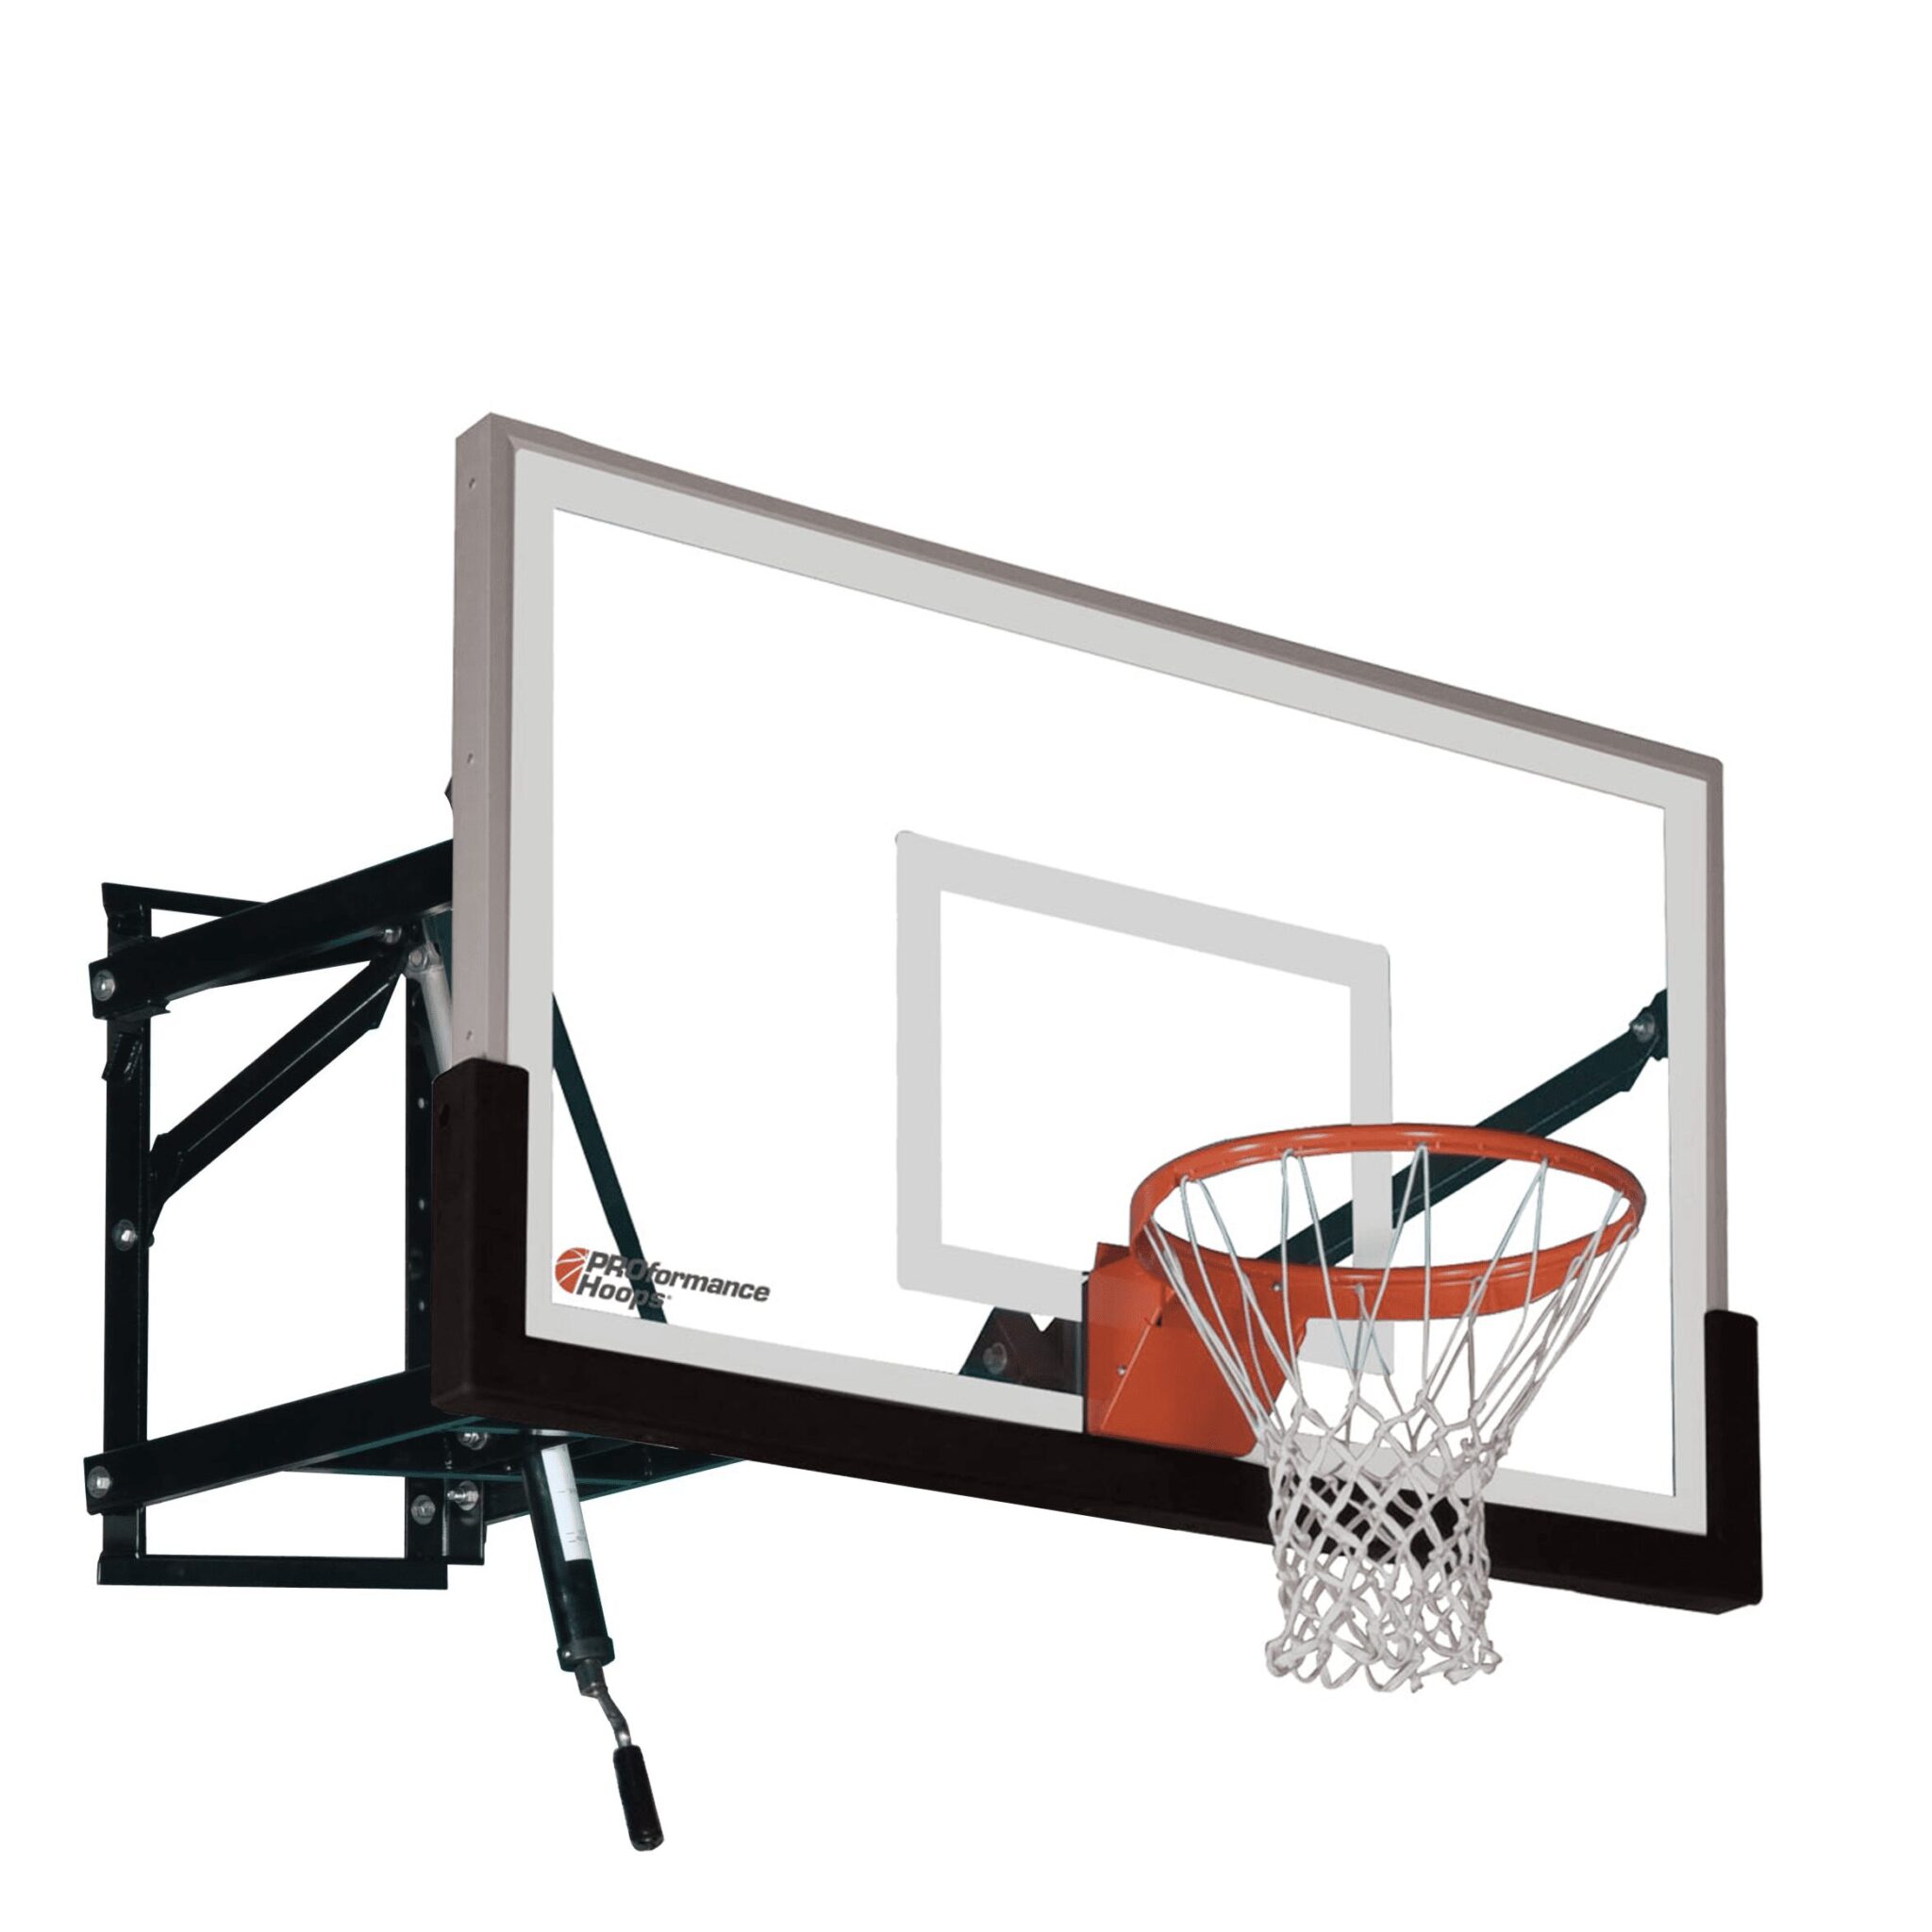 WM60 60" Wall Mount Basketball Hoop